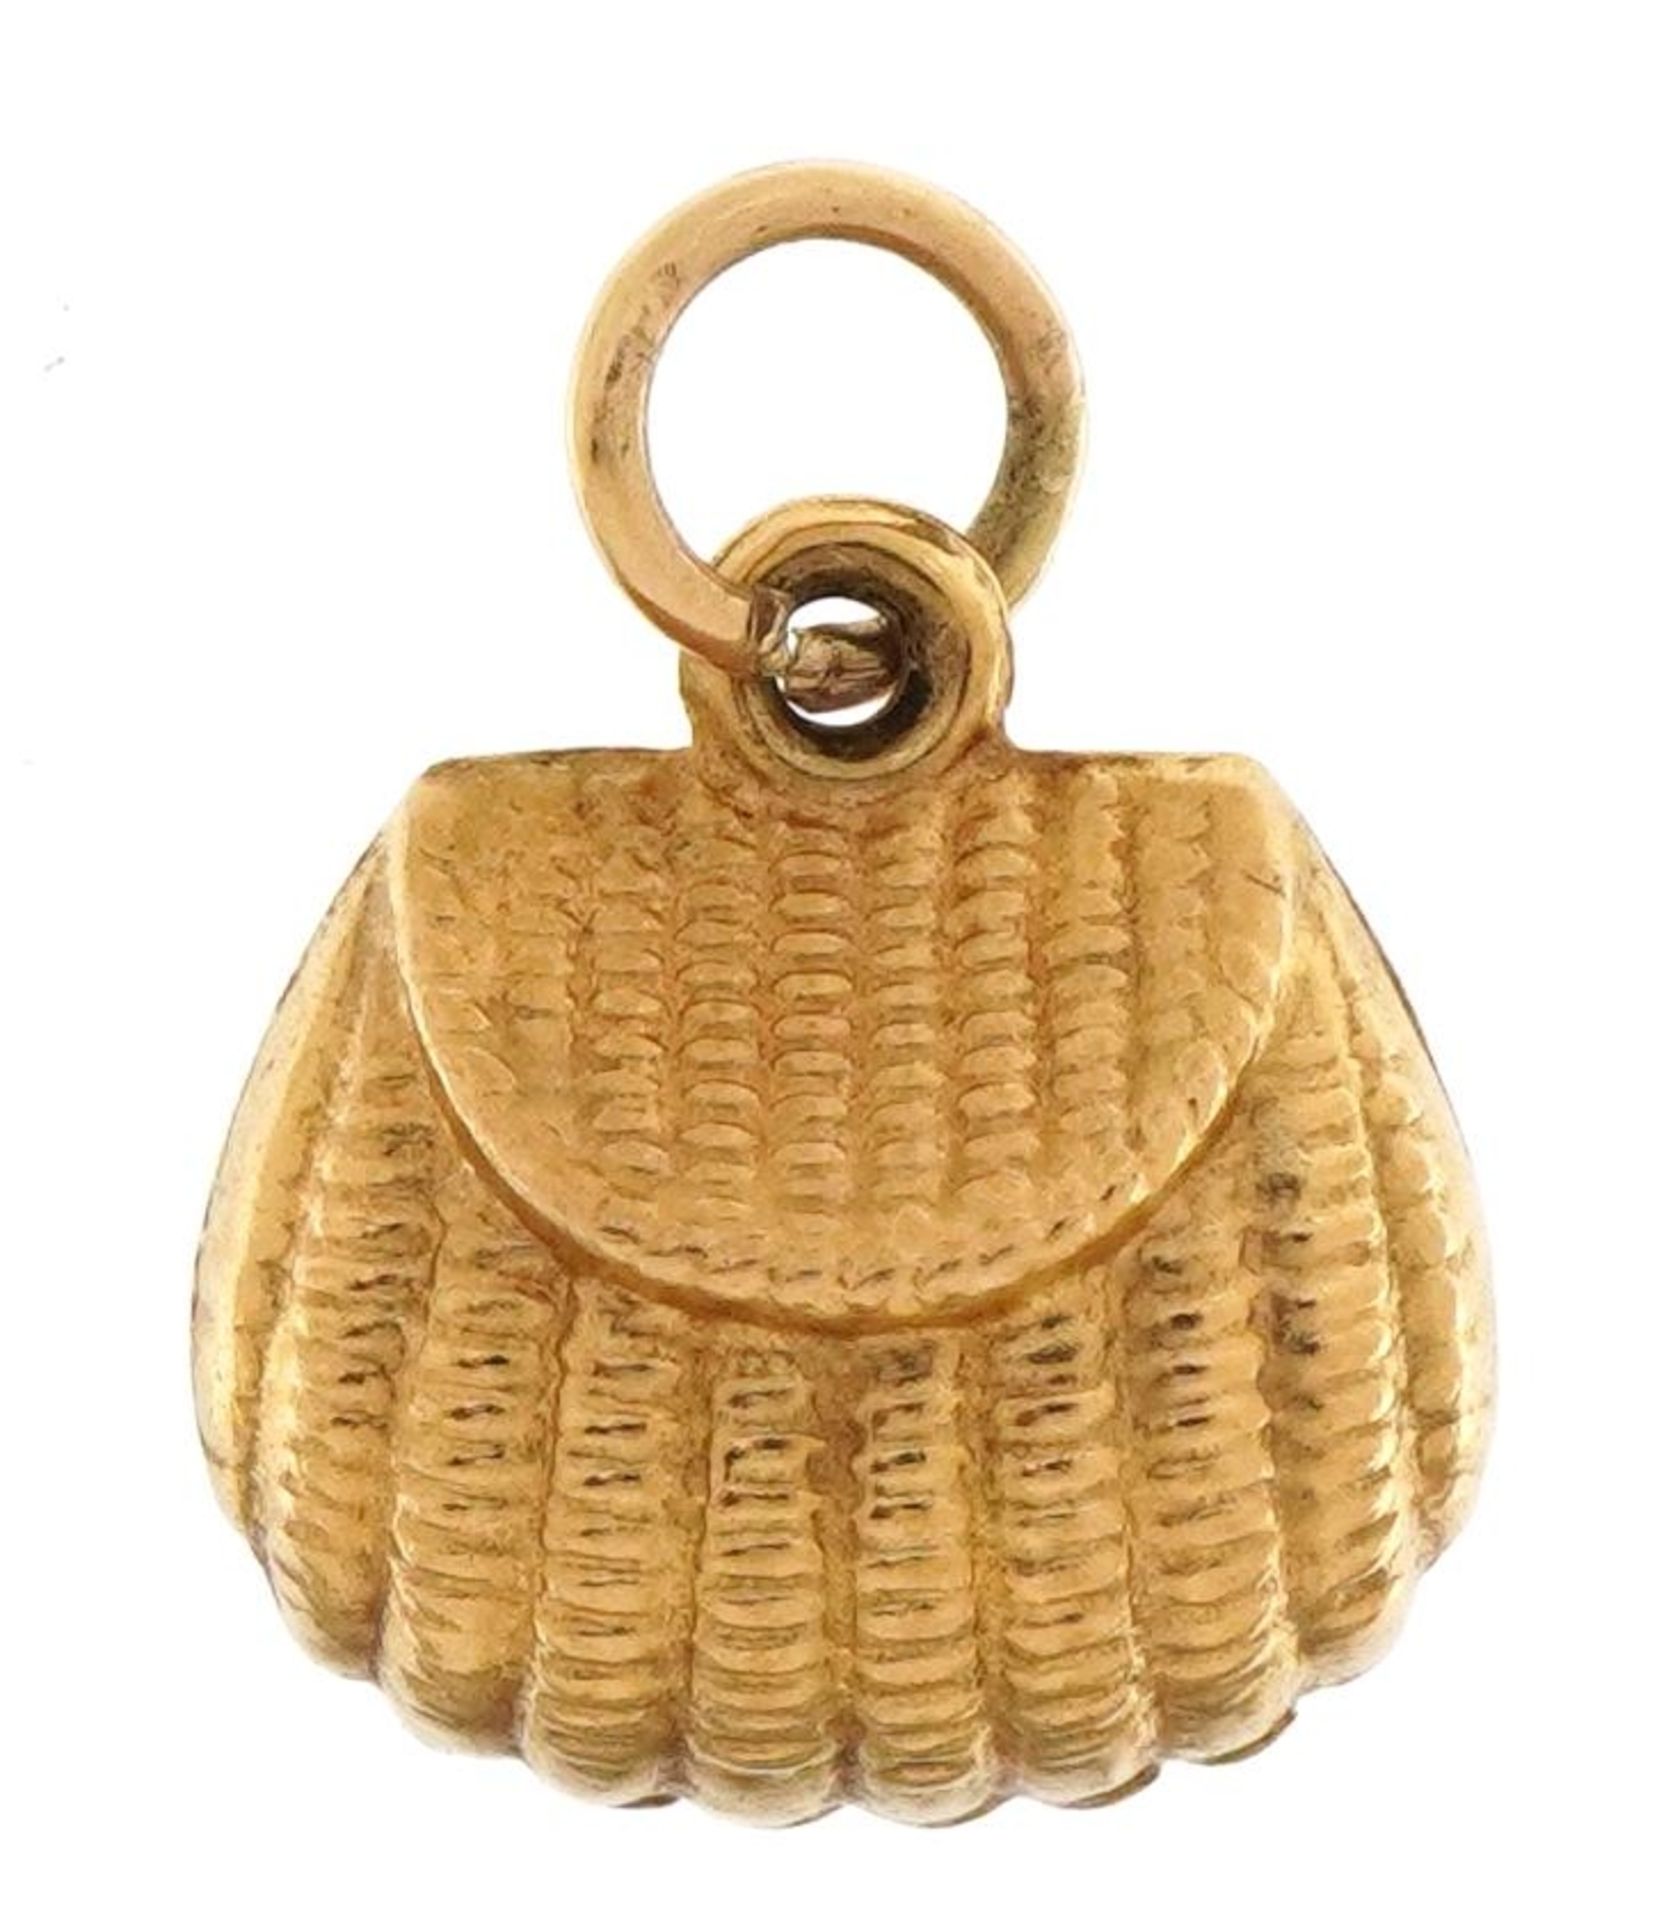 9ct gold handbag charm, 1.3cm high, 0.7g